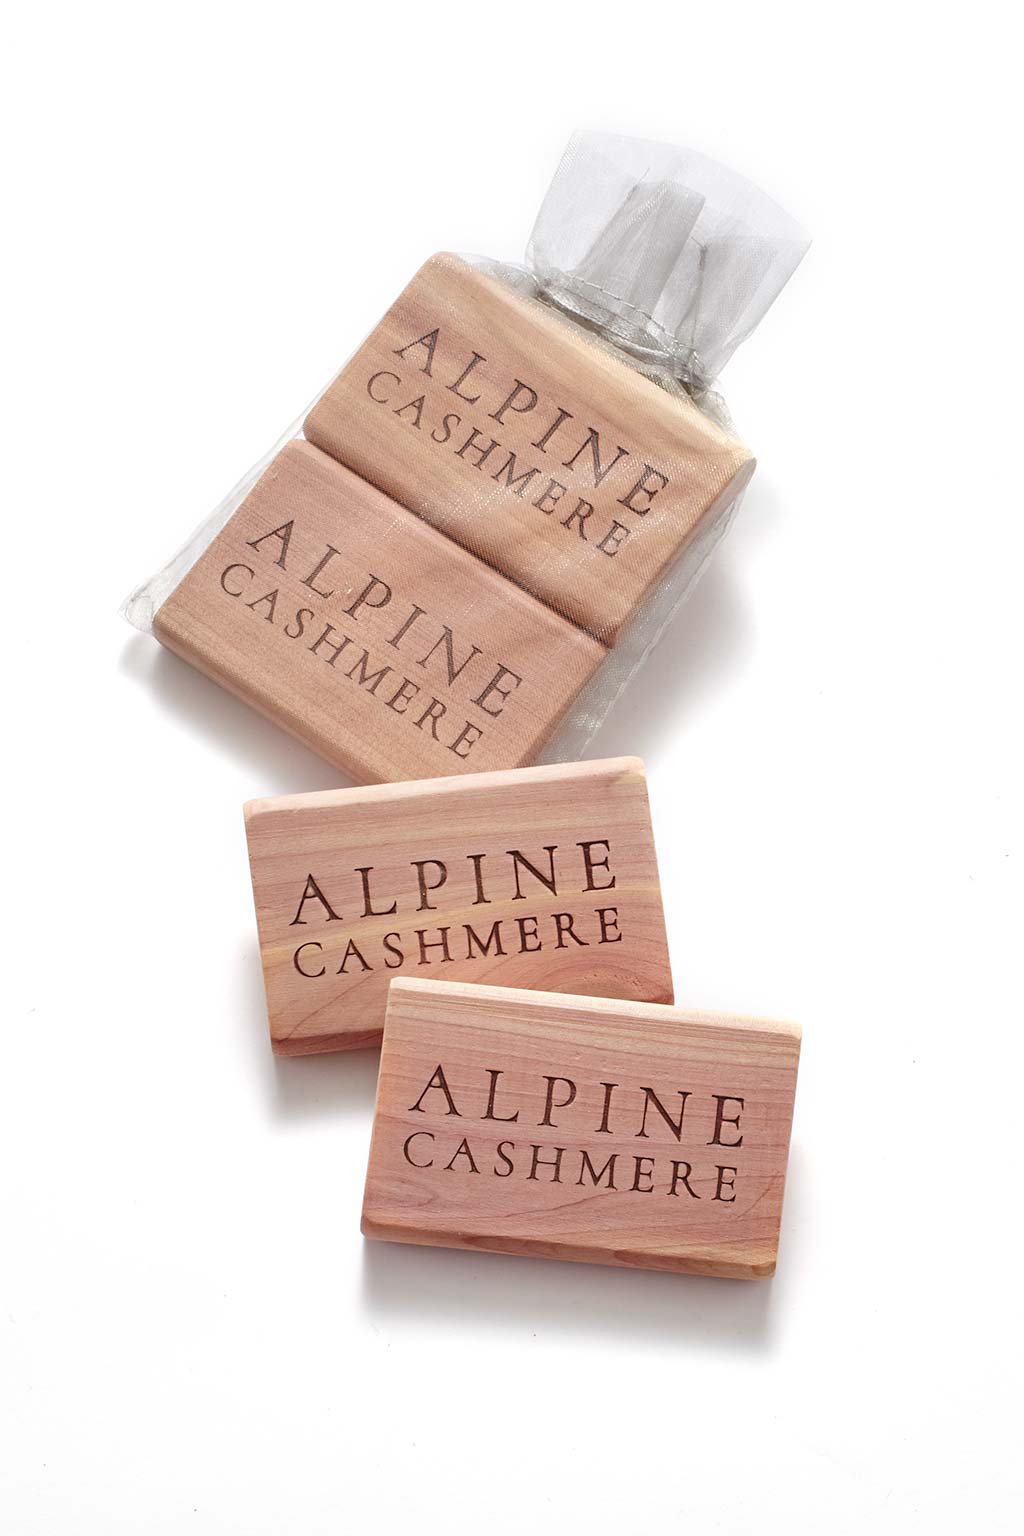 Alpine Cashmere's Set of Two Cedar Blocks to Keep Cashmere Fresh